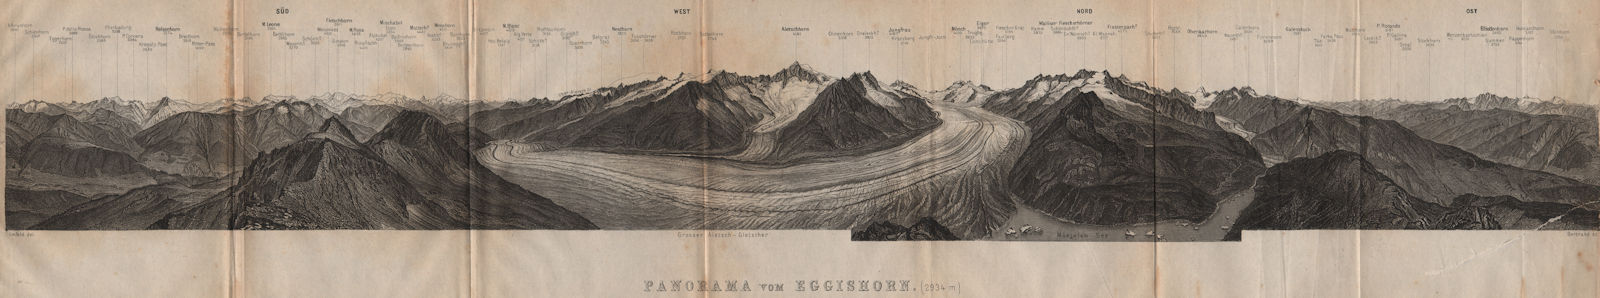 EGGISHORN PANORAMA Aletschhorn Glacier Nesthorn Mont Blanc Leone Eiger 1893 map